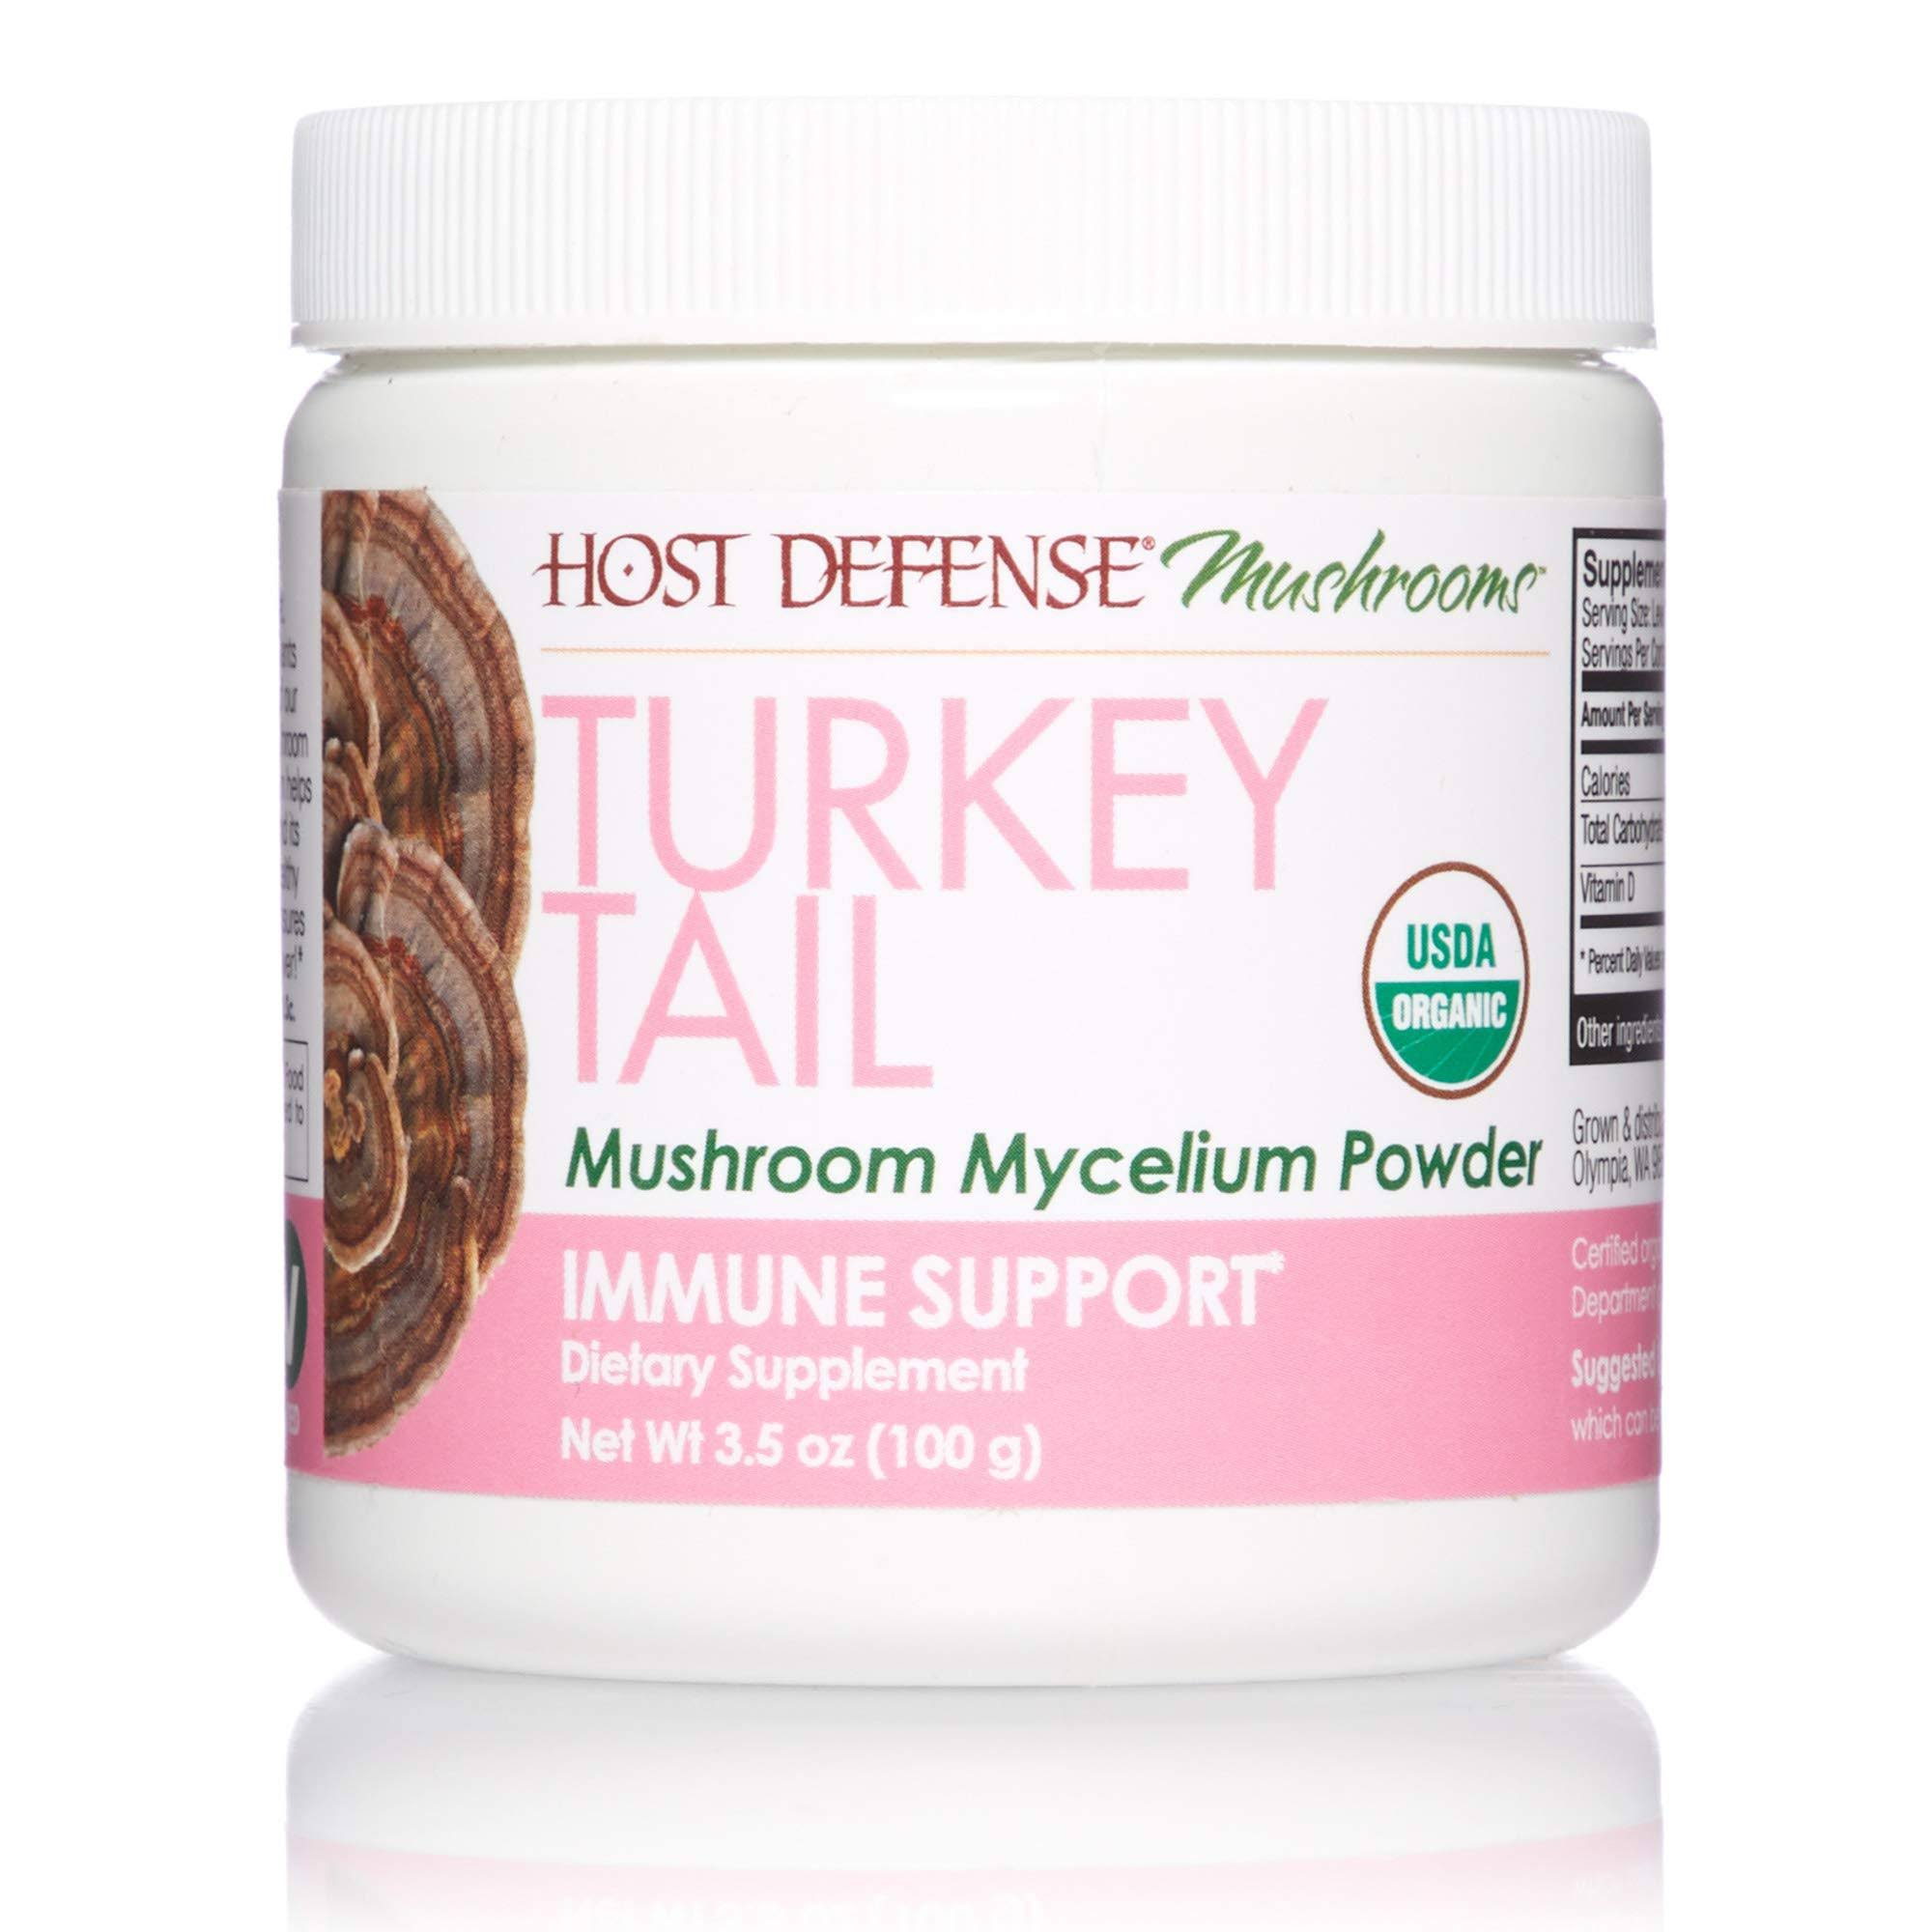 Host Defense Turkey Tail Mushroom Mycelium Powder